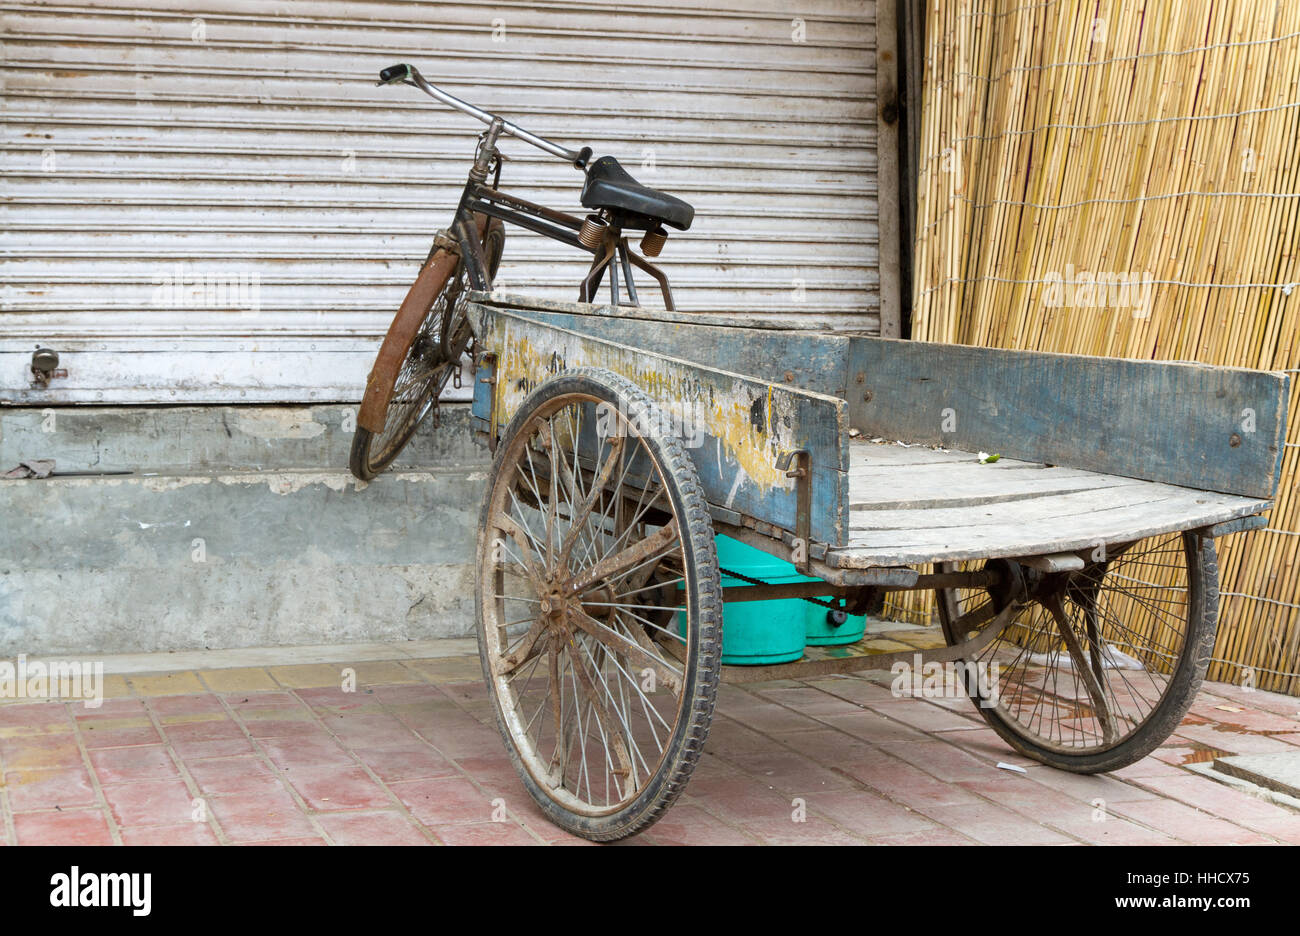 wheel, asia, india, metal, rusty, rusted, trailer, put down, saddle, ajar, Stock Photo